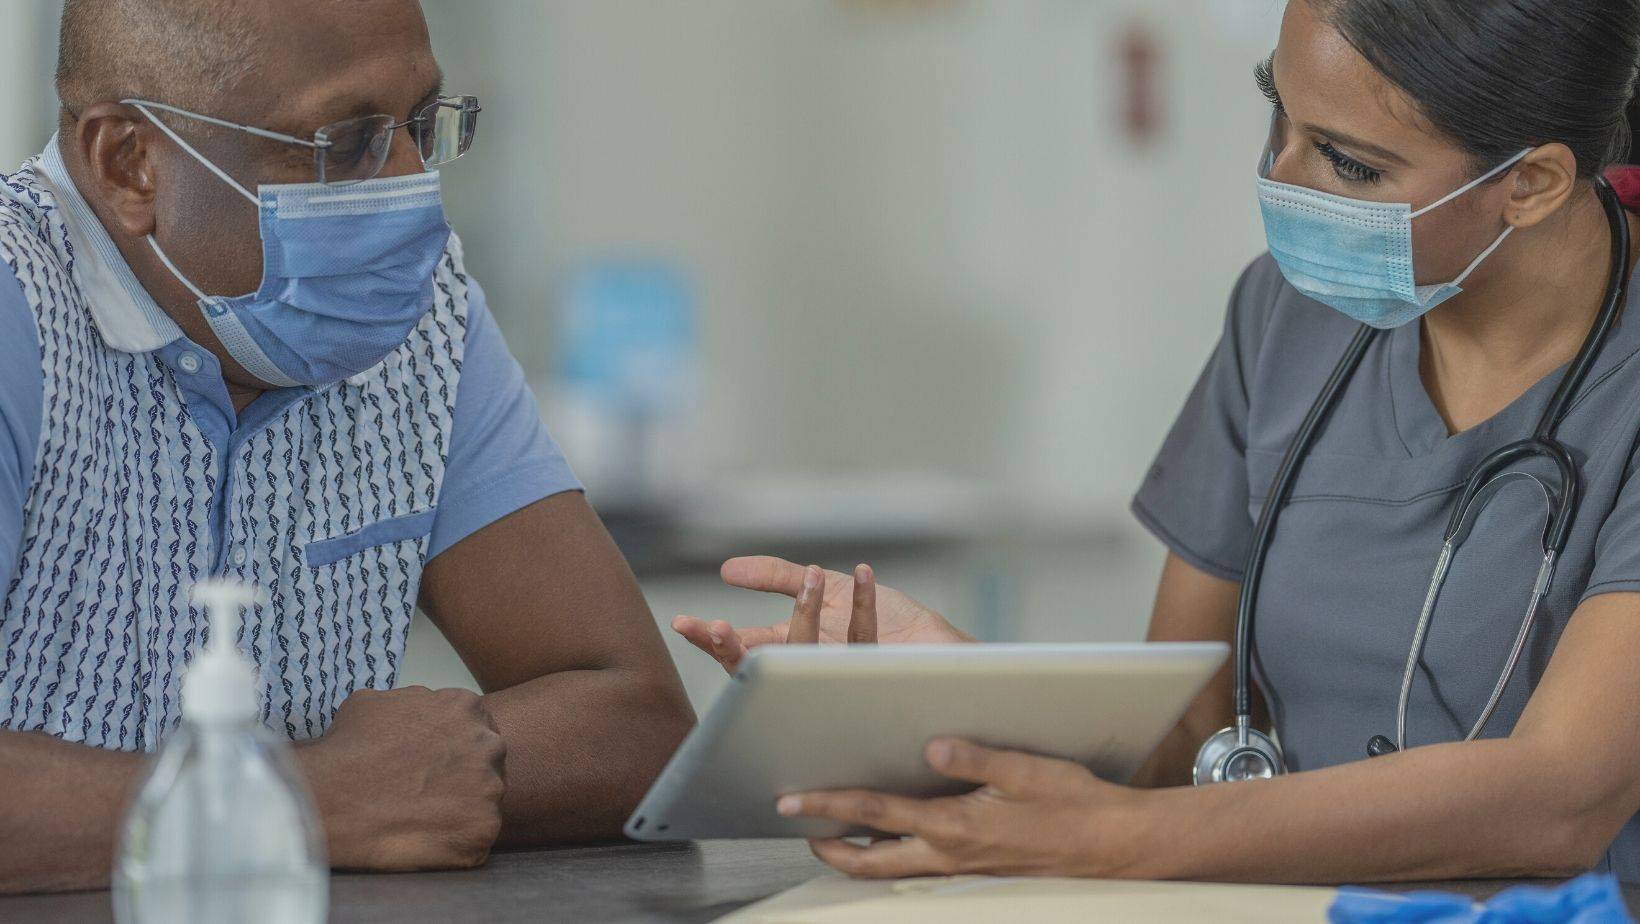 A nurse shows a man information on a tablet